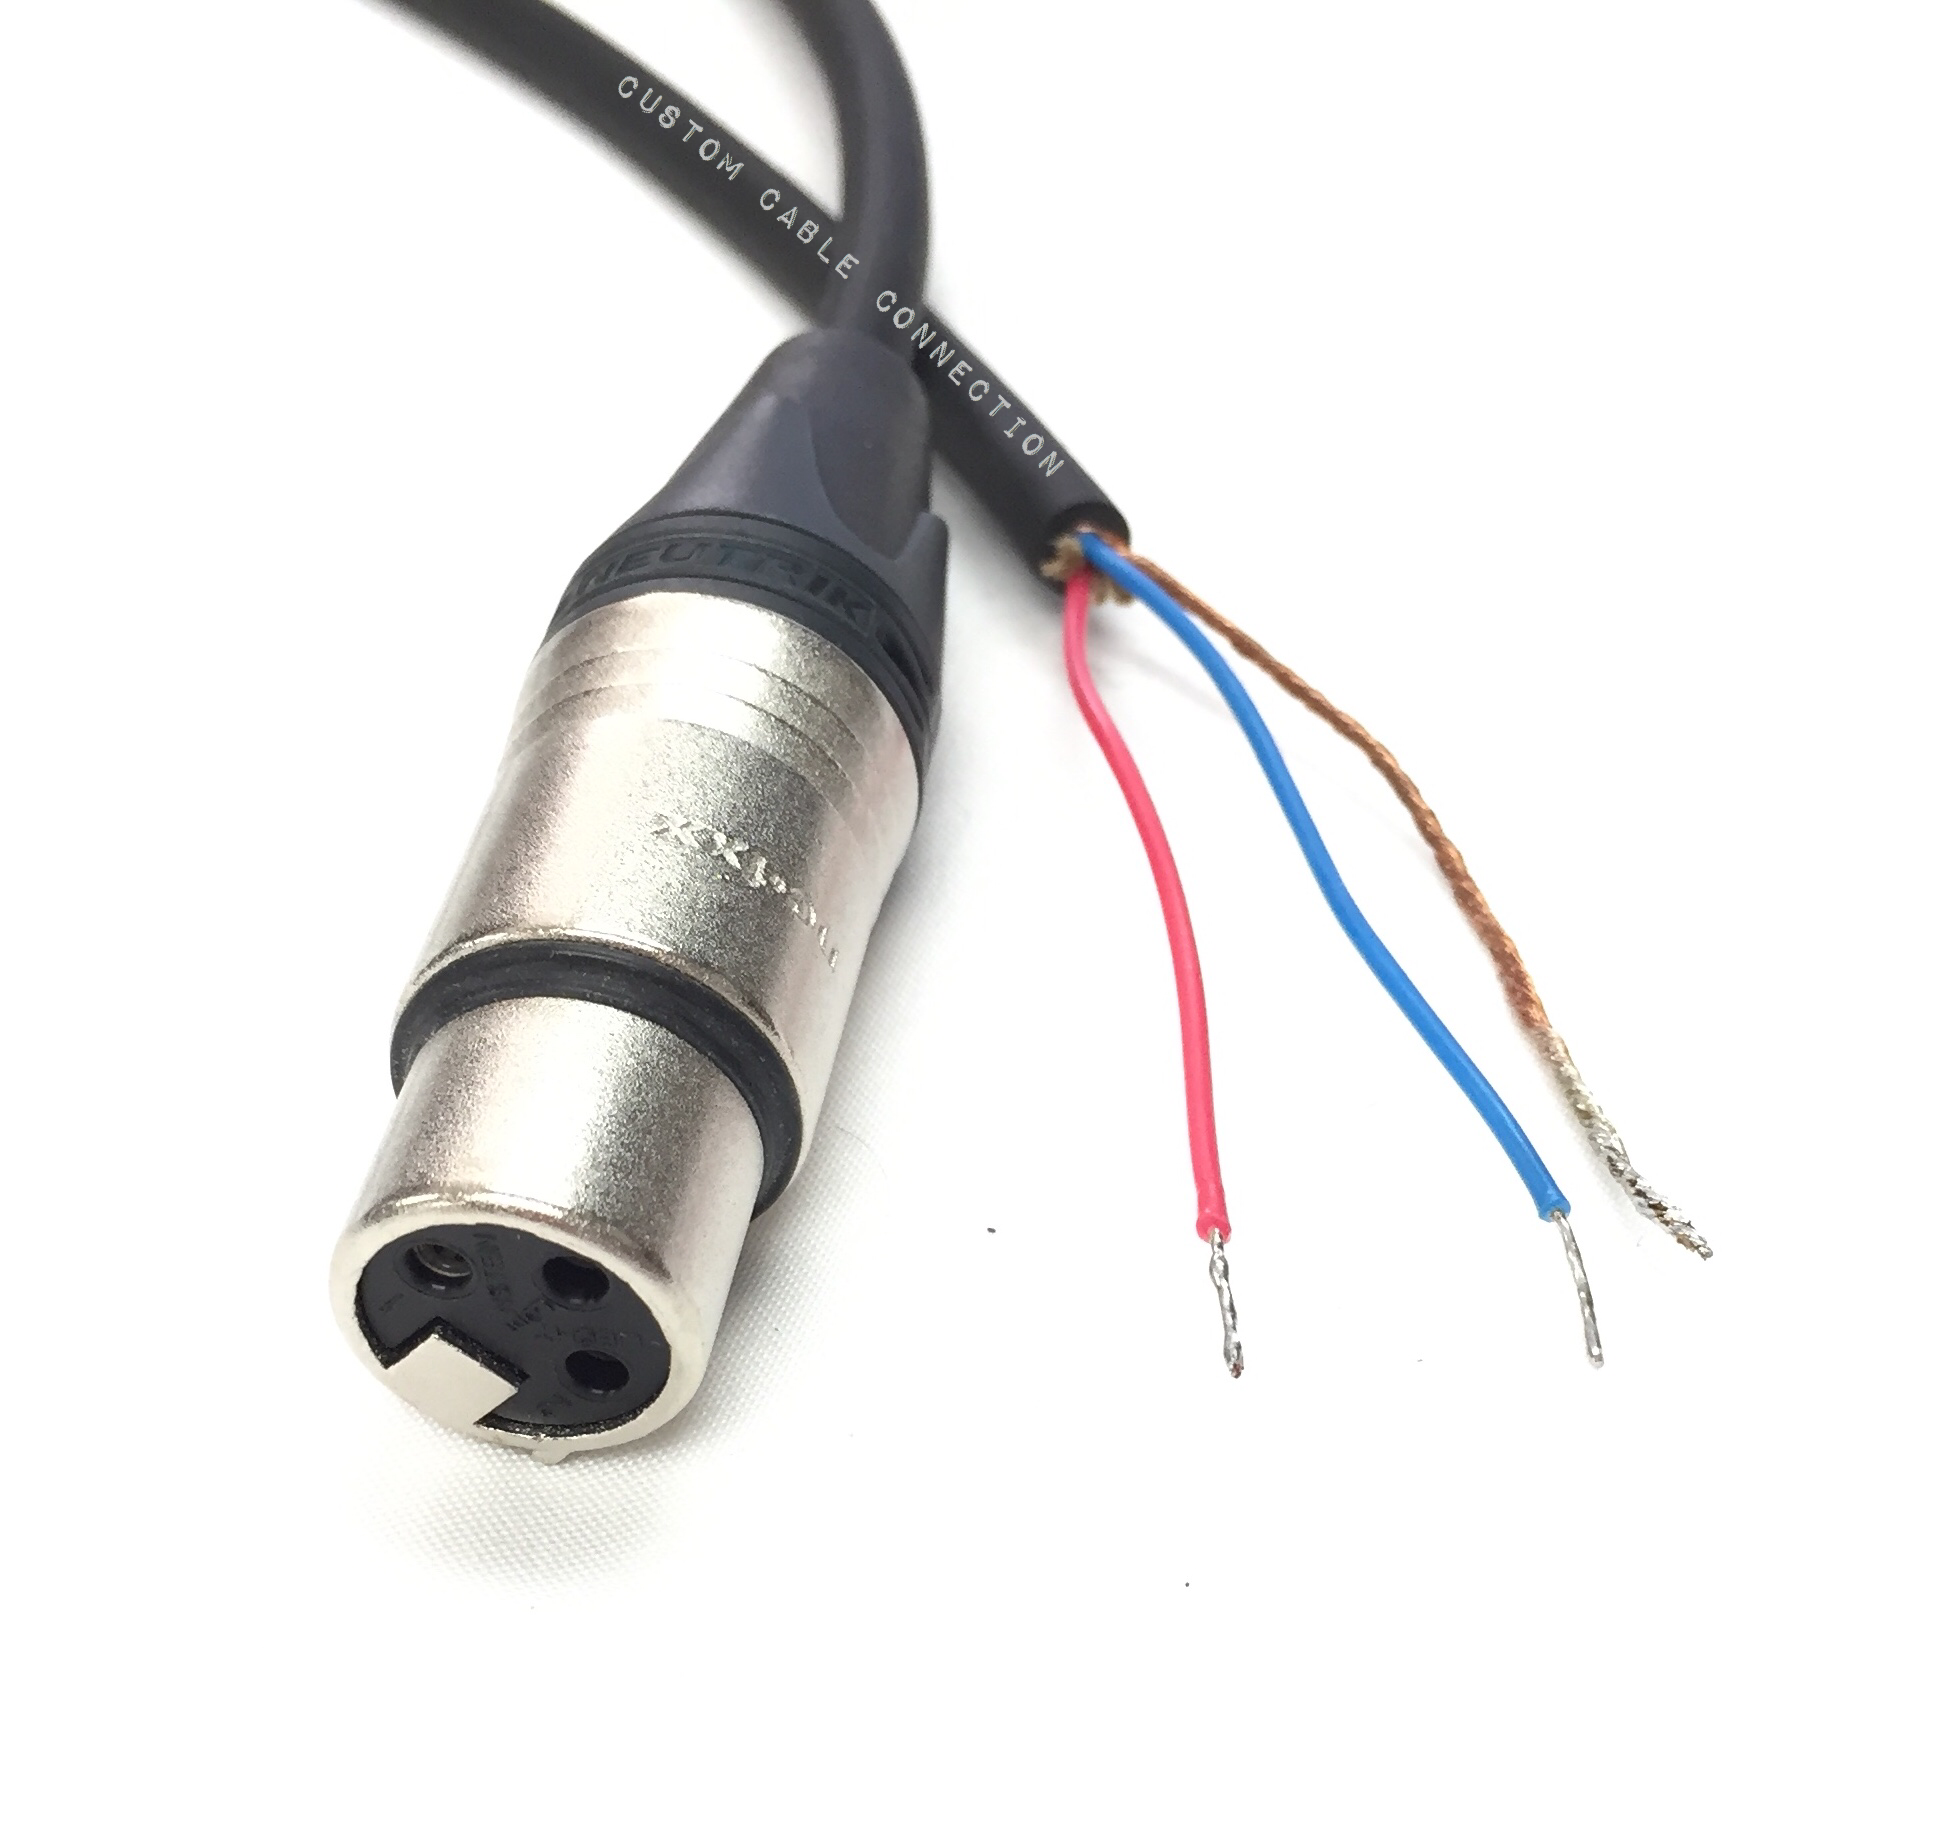 Neutrik 3-Pole XLR Male to RCA Male Adapter